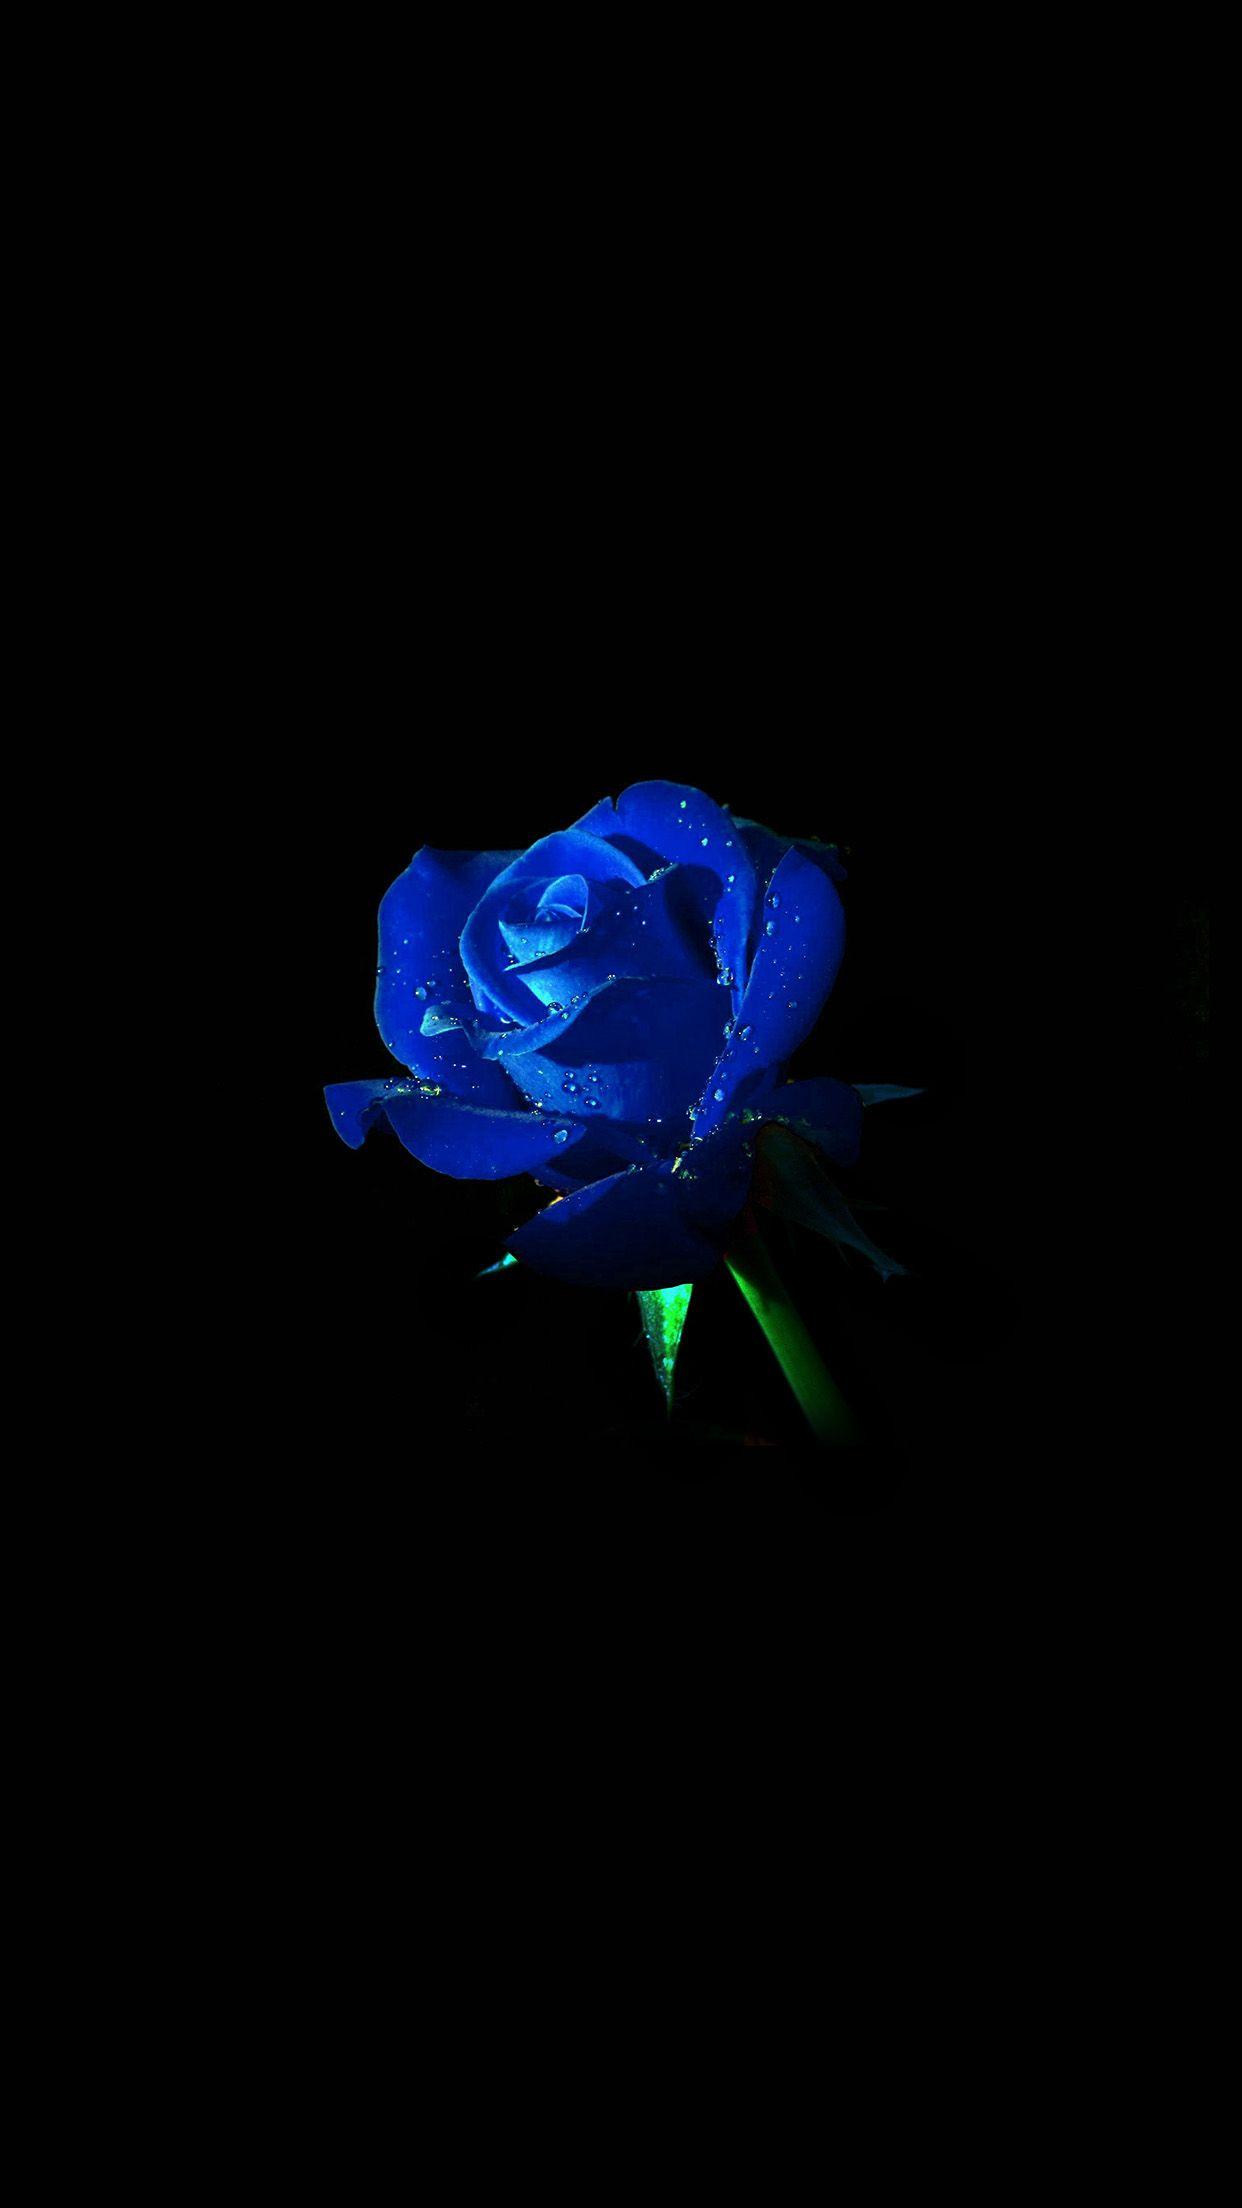 iPhone X wallpaper. blue rose dark